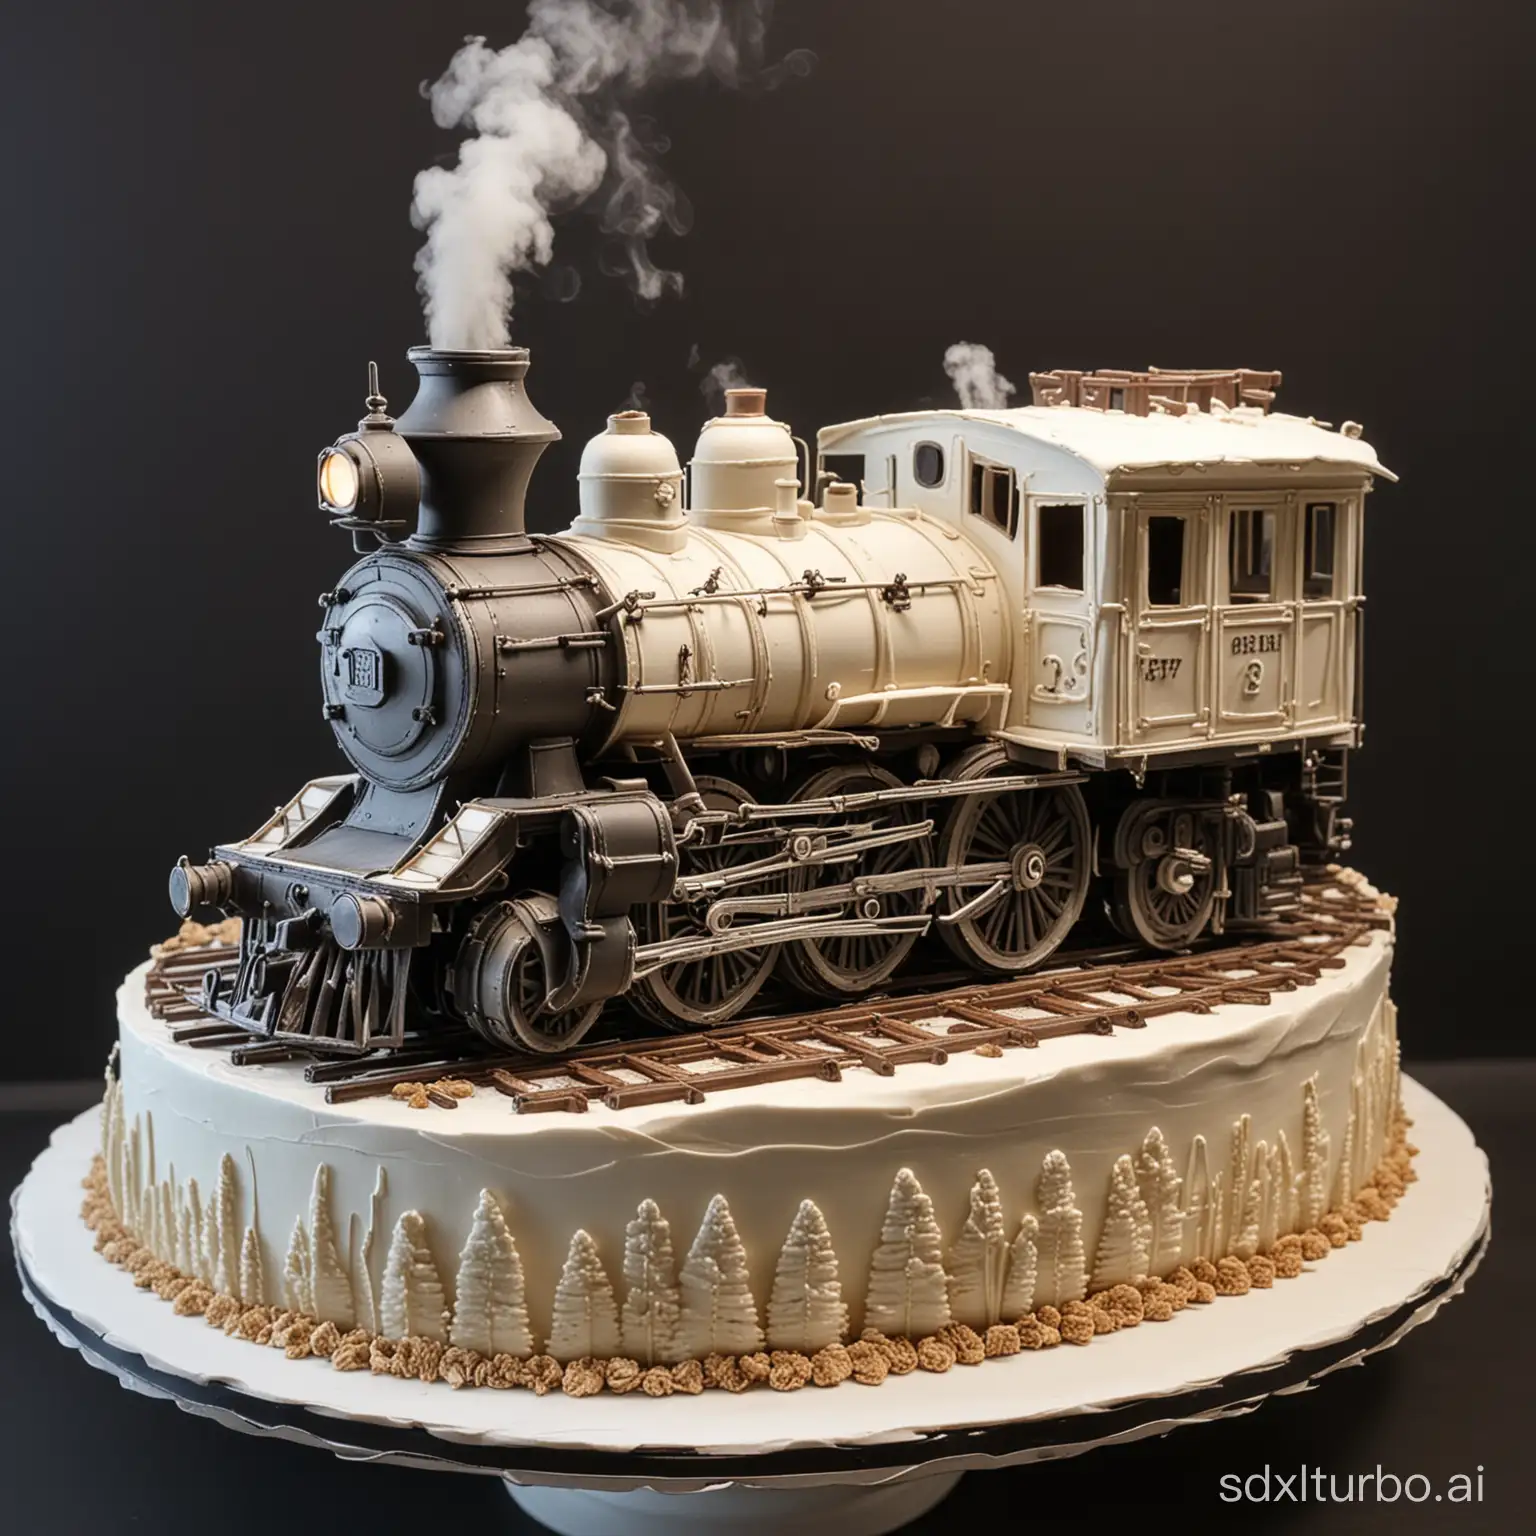 Grand-Festive-Locomotive-Cake-DAWUKOU-Celebration-Centerpiece